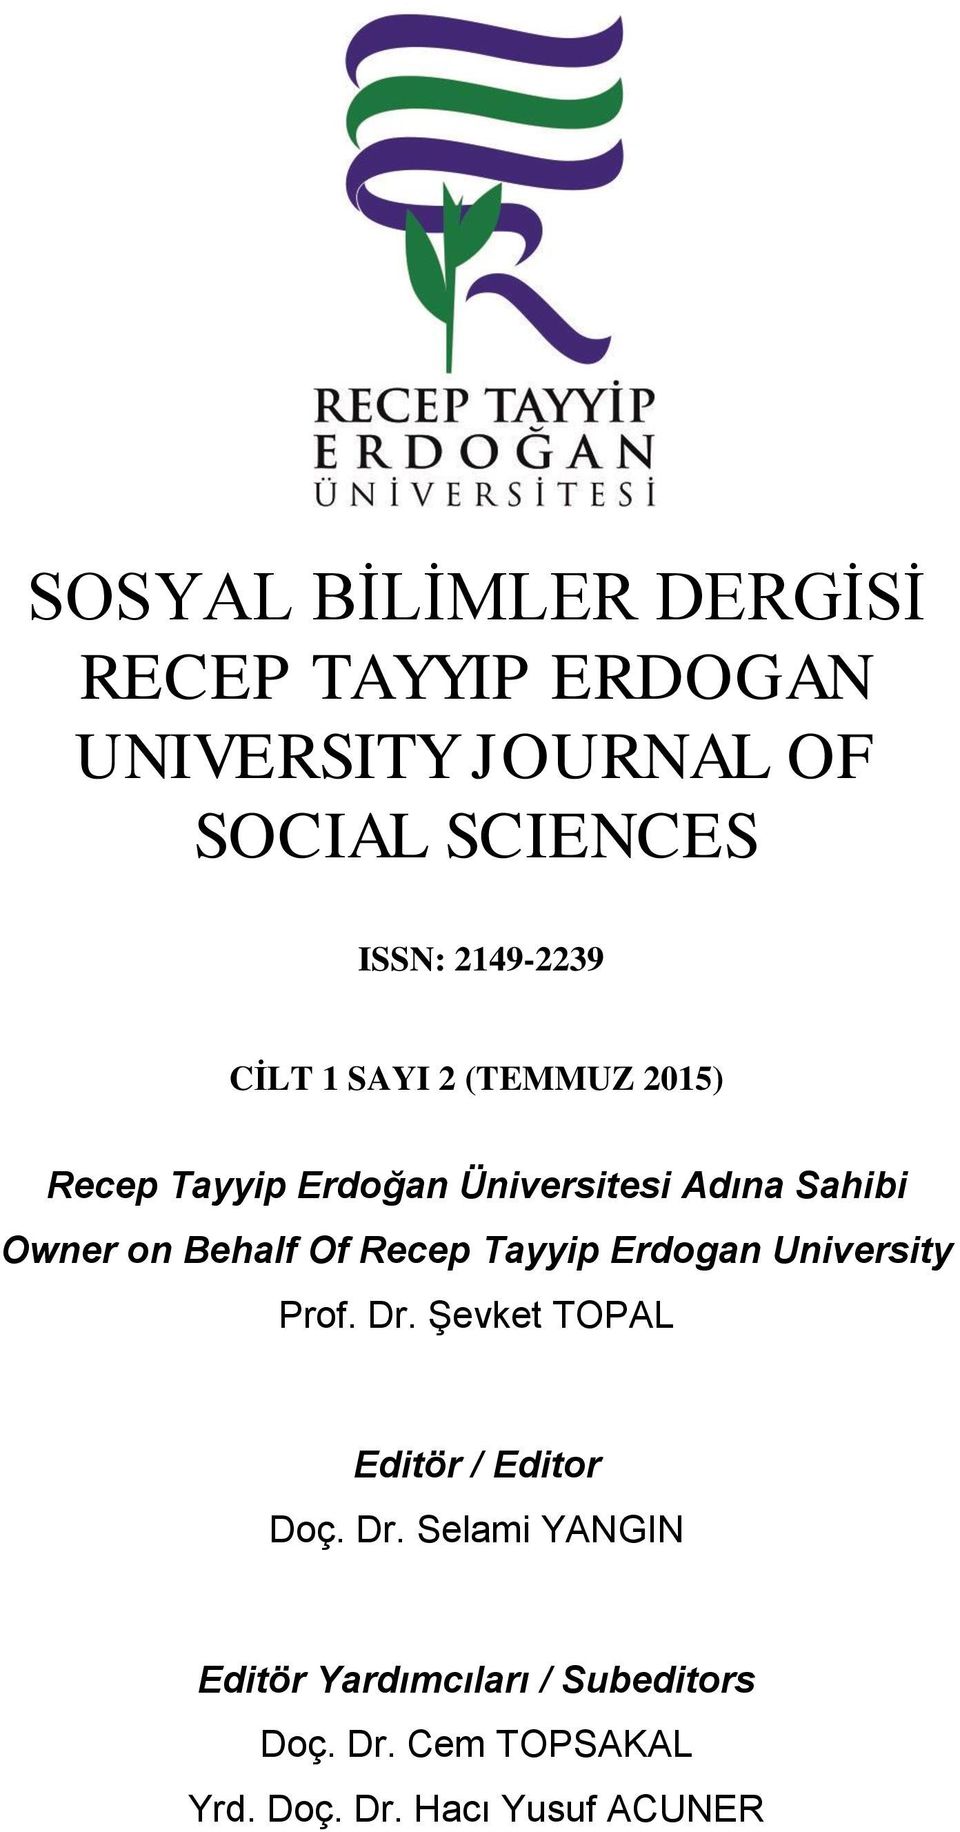 Behalf Of Recep Tayyip Erdogan University Prof. Dr.